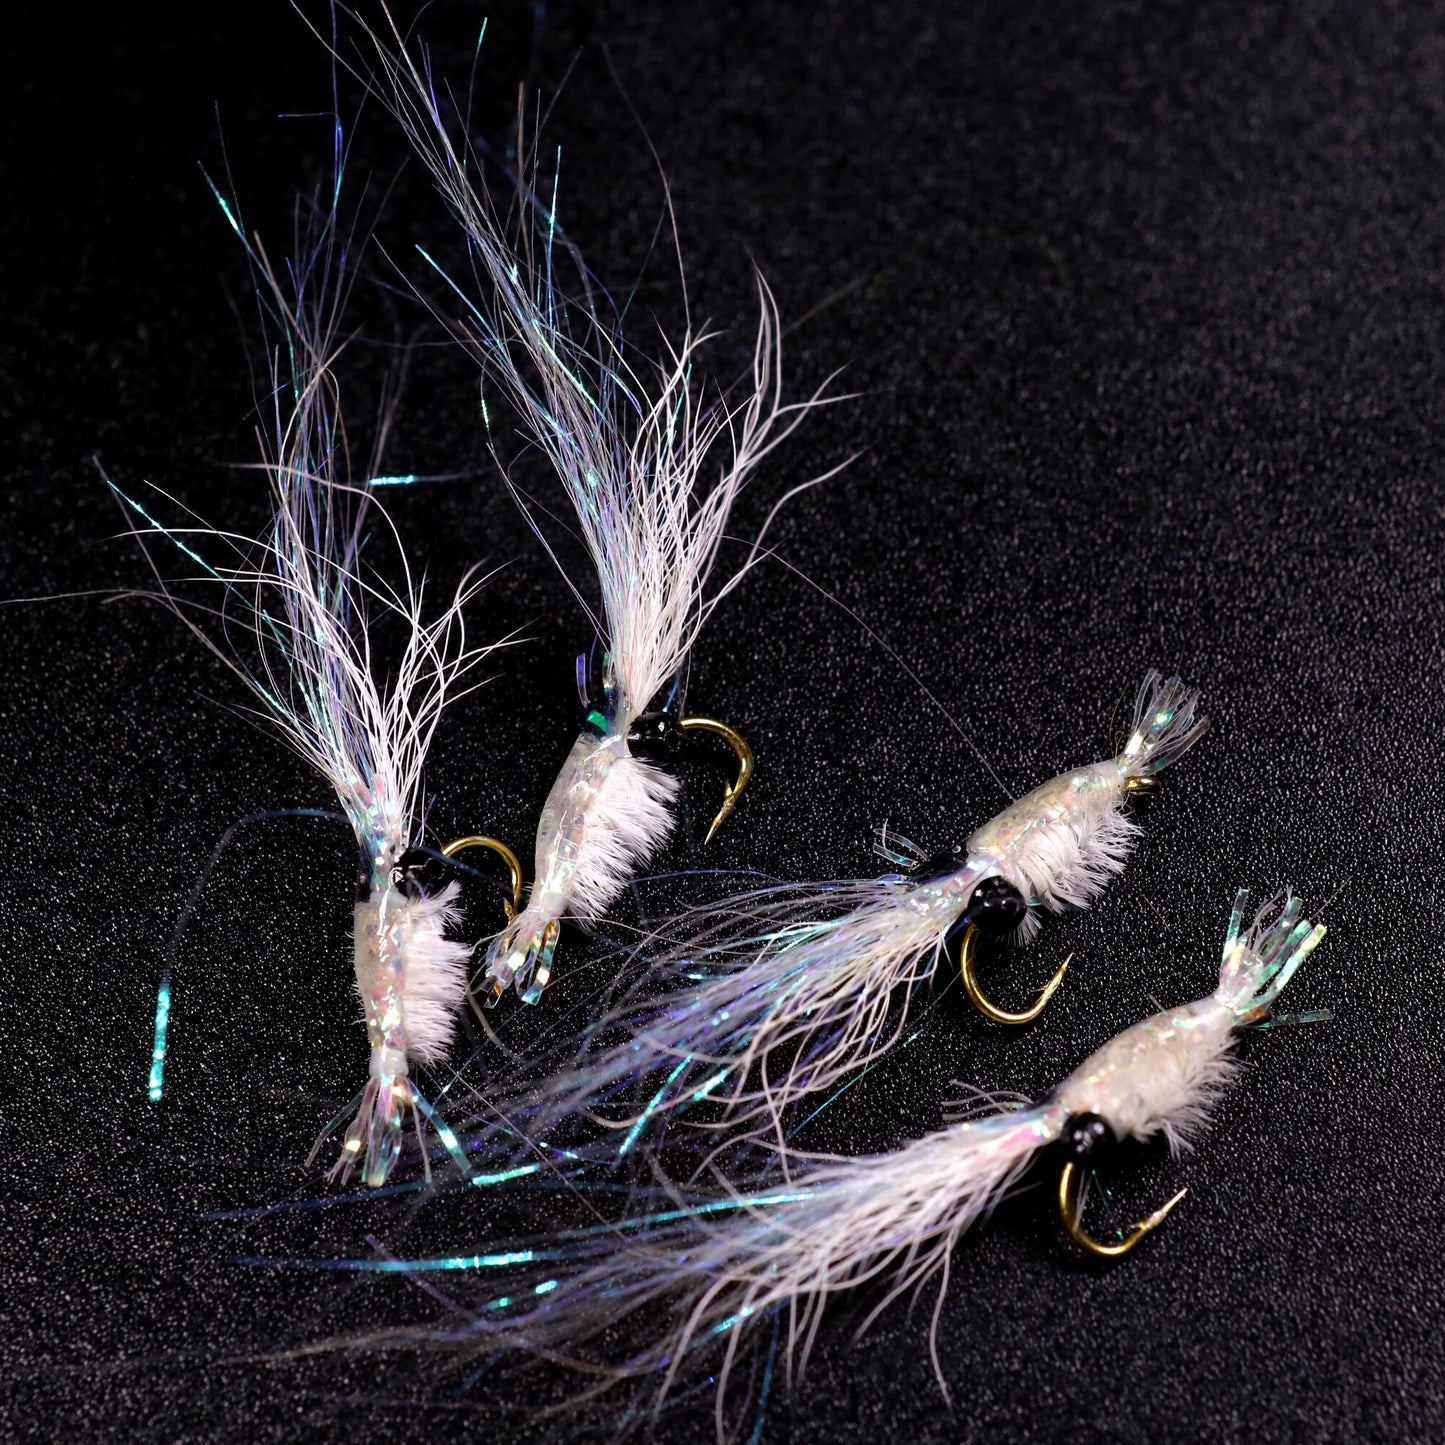 Bimoo 4PCS White #4~#16 Mini Shrimp Salt Fly Bass Steelhead Trout Salmon Flies Nymph Fly for Saltwater Freshwater Fly Fishing